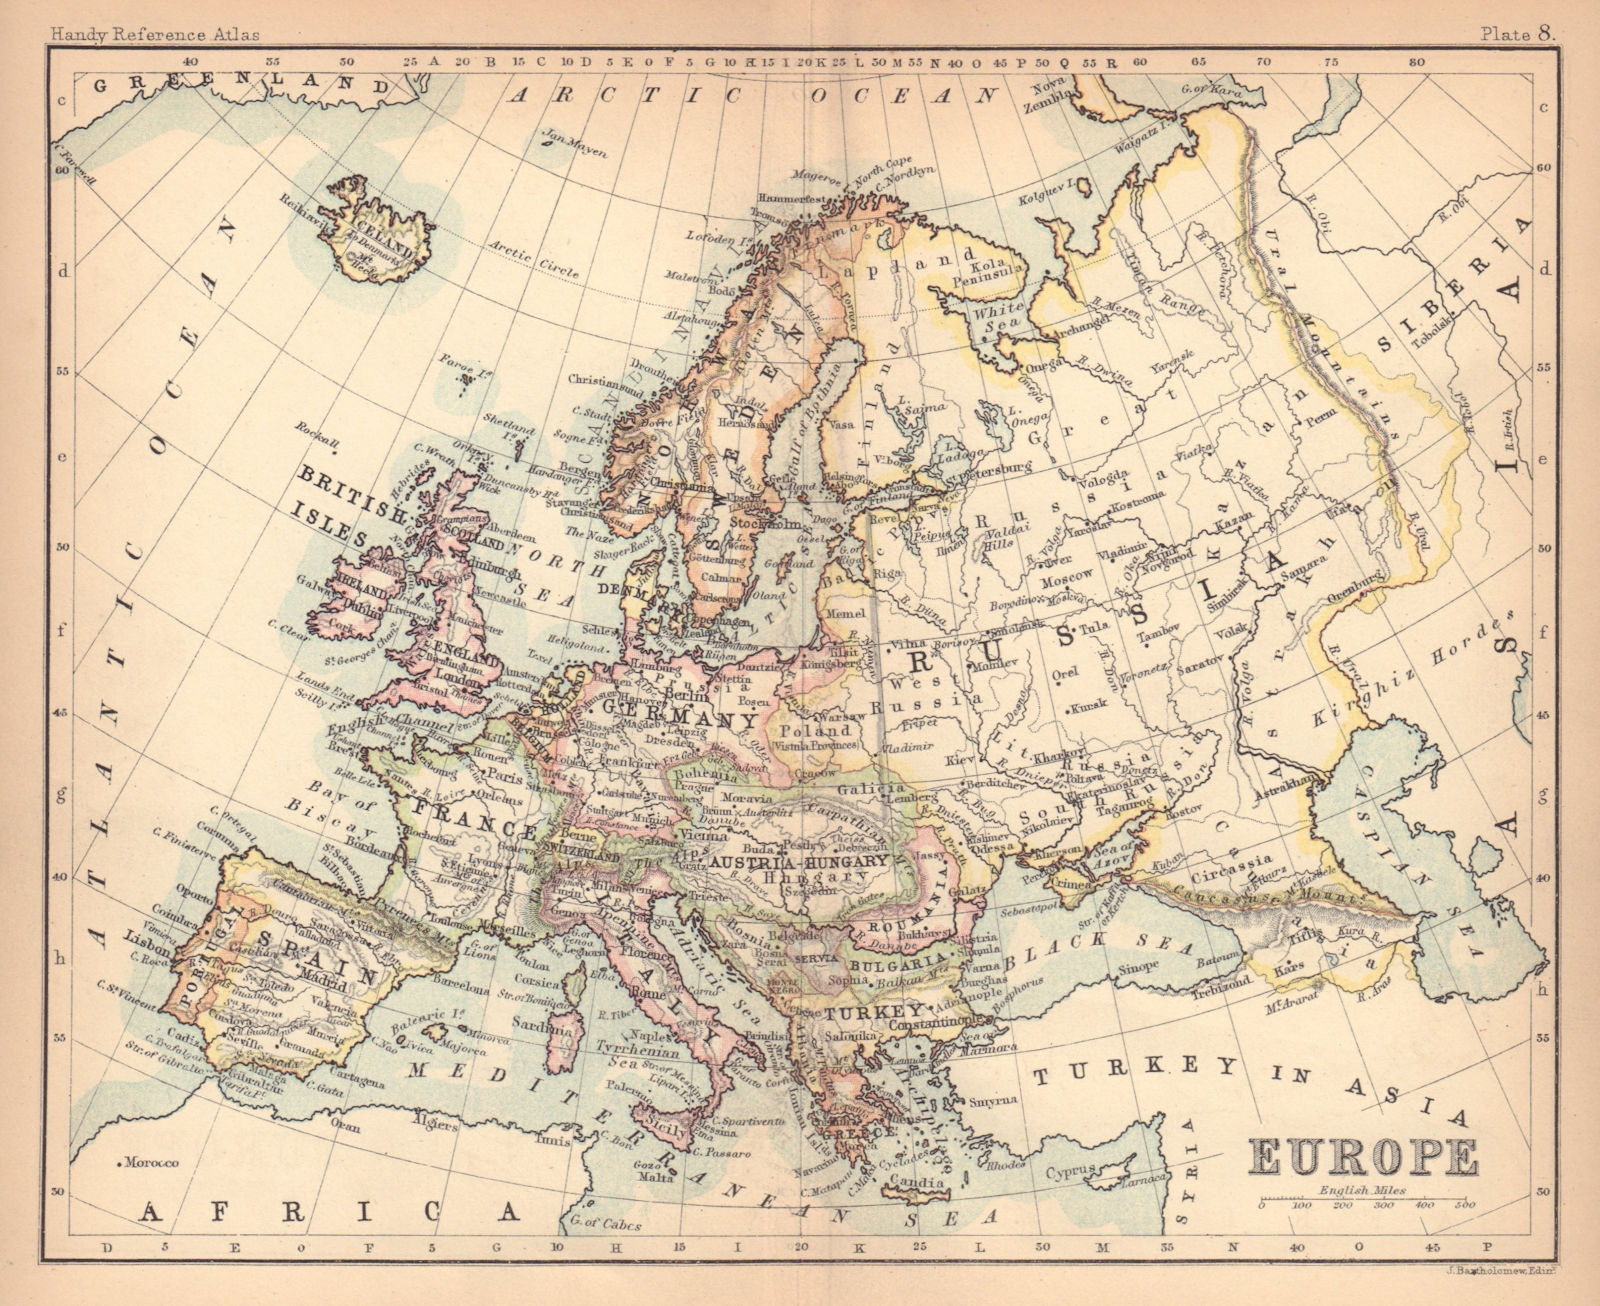 Europe political. Austria-Hungary. Turkey in Europe. BARTHOLOMEW 1888 old map